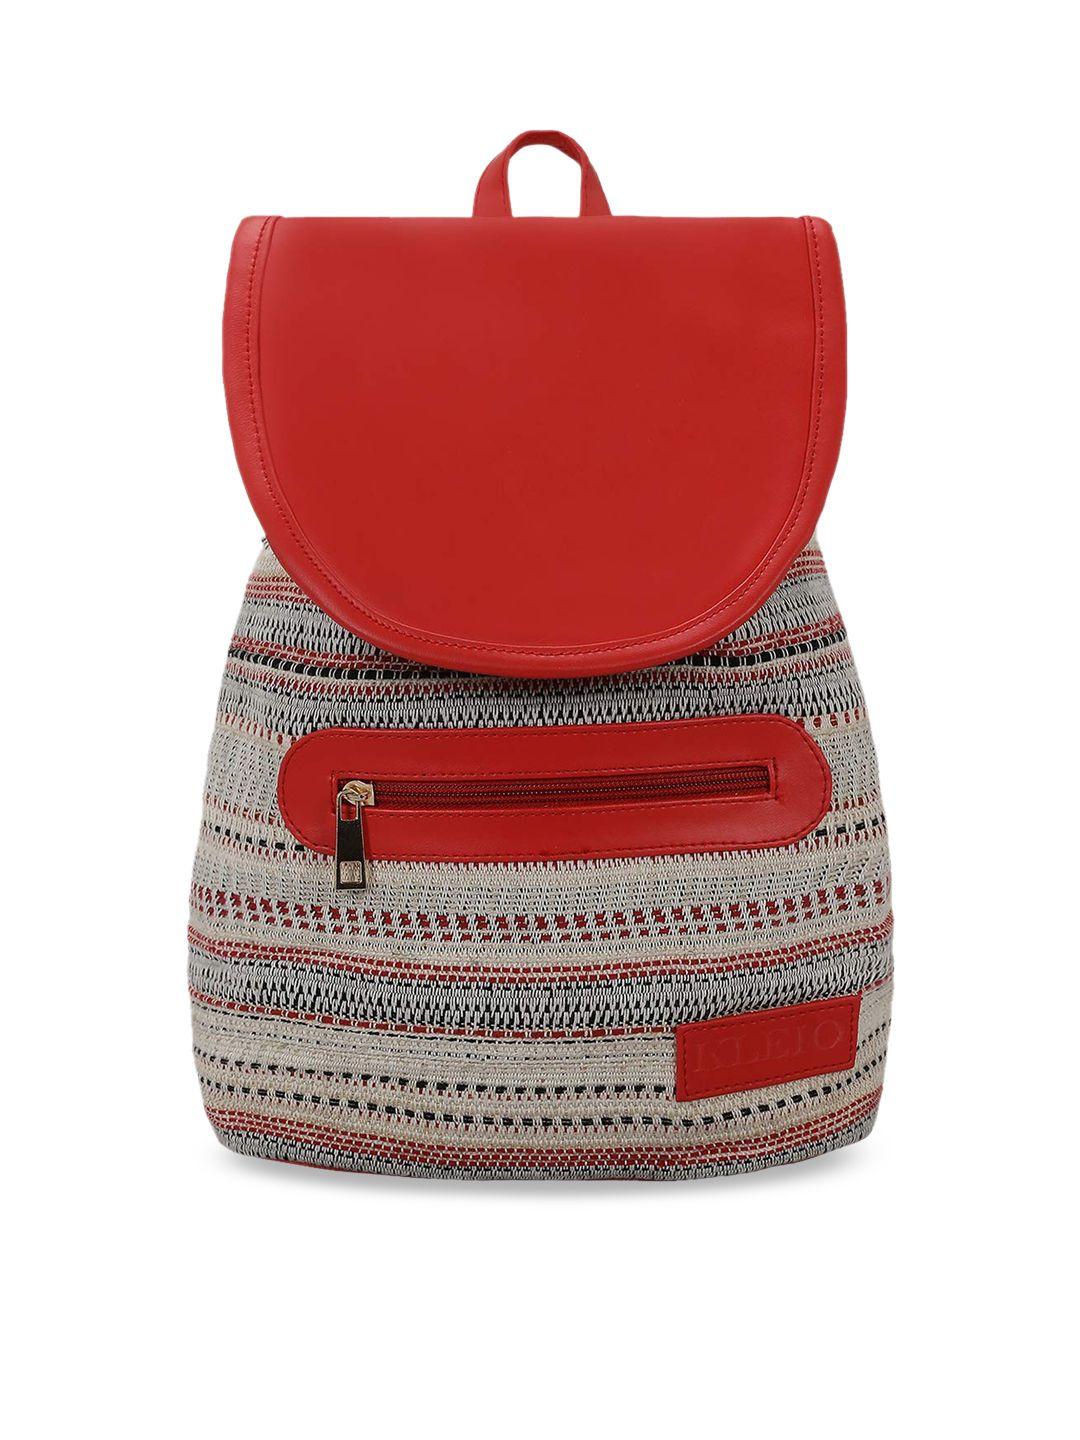 kleio women red & beige woven design backpack